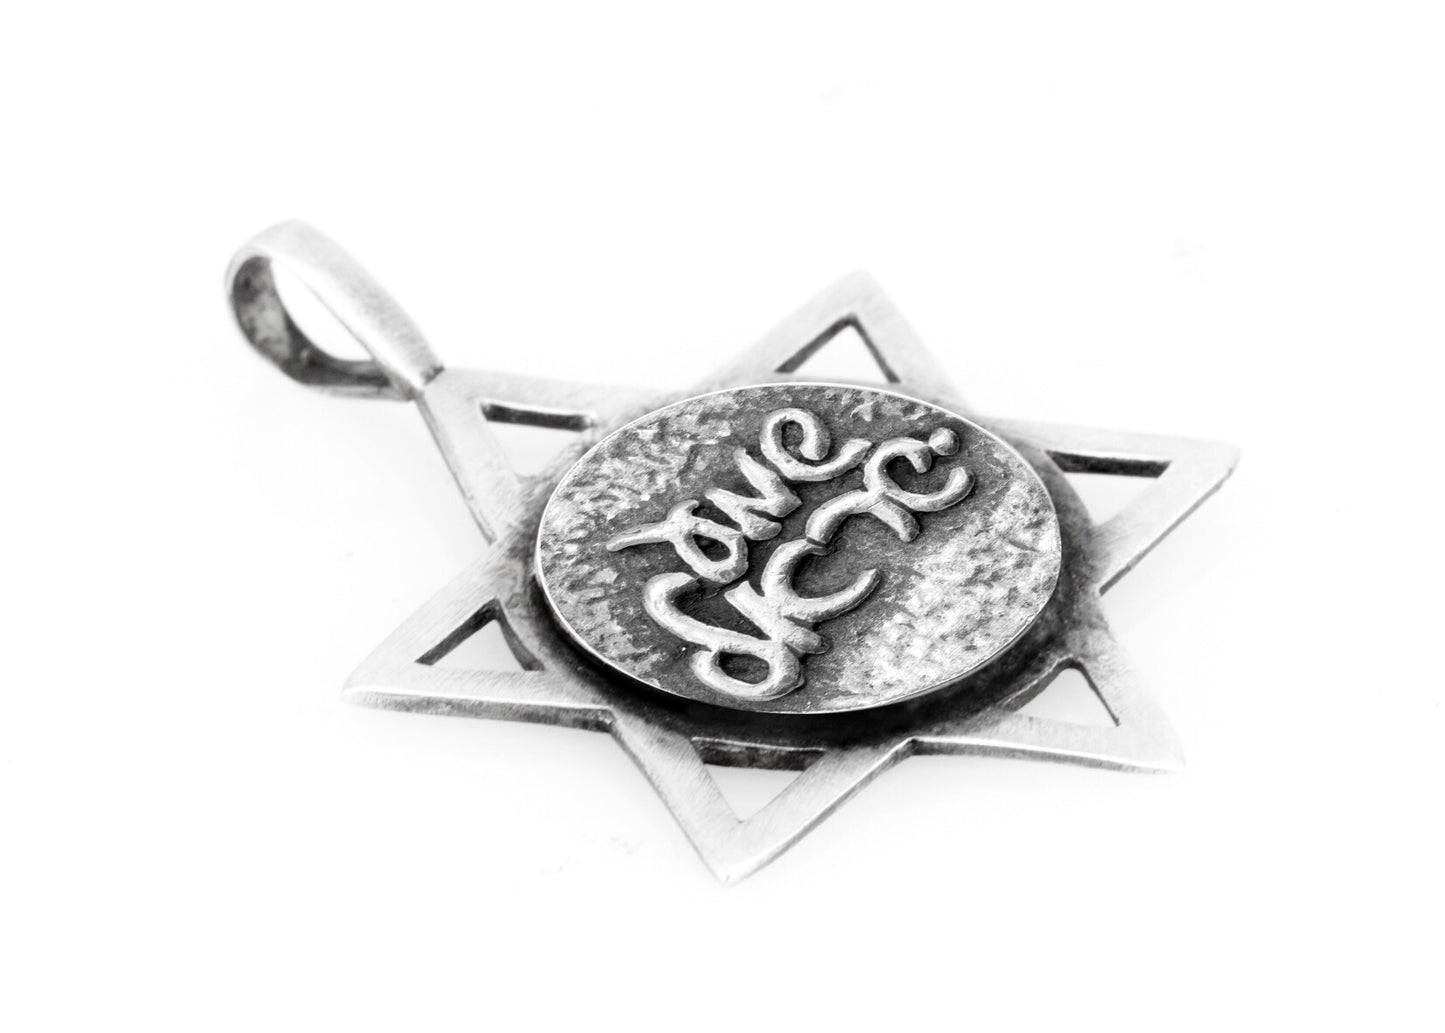 Magen David Necklace, Star Of David Pendant, Shema Israel Pendant, Shema Necklace, Coin Necklace, Jewish Necklace, Coin Pendant